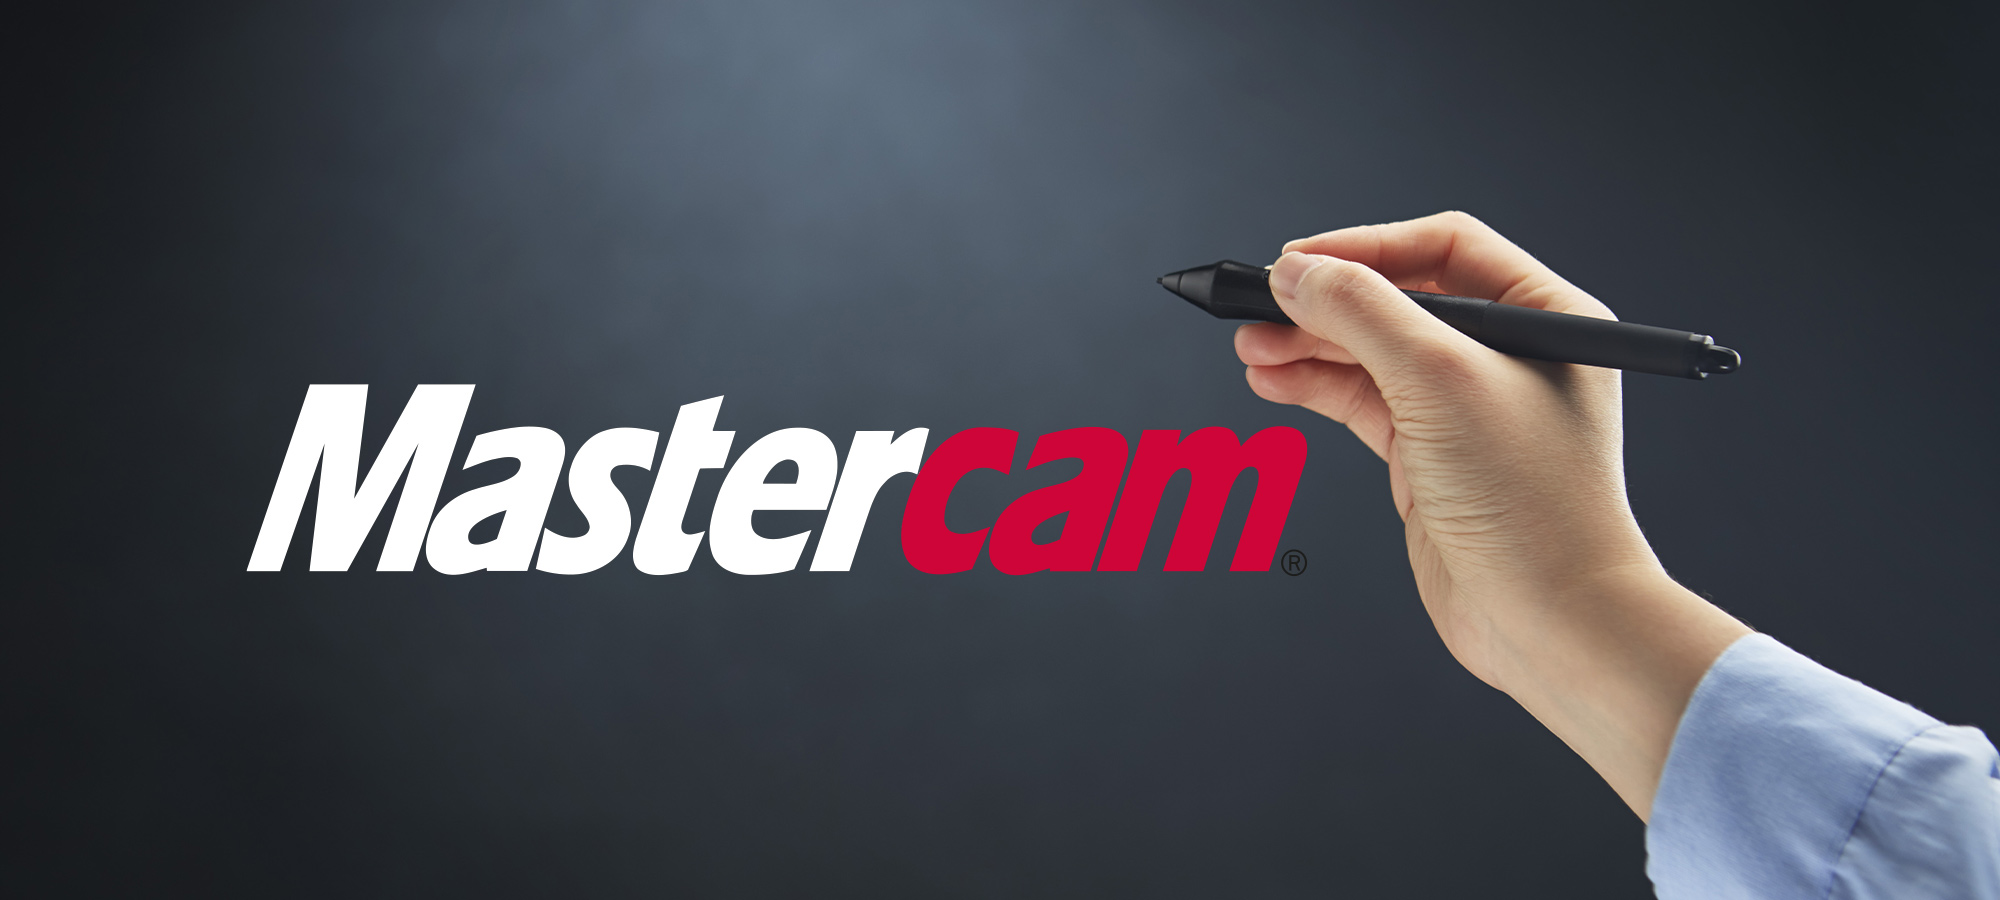 Logo Mastercam avec une main qui tient un stylet